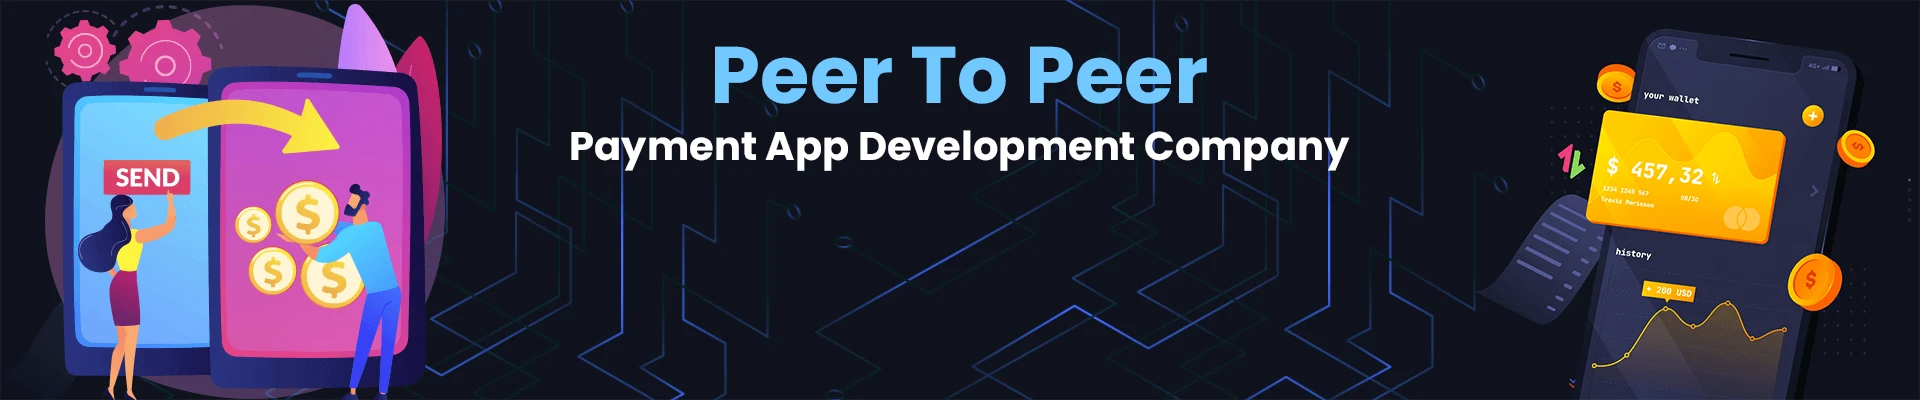 Peer To Peer Payment App Development Company | Peer To Peer Payment App Developers For Hire